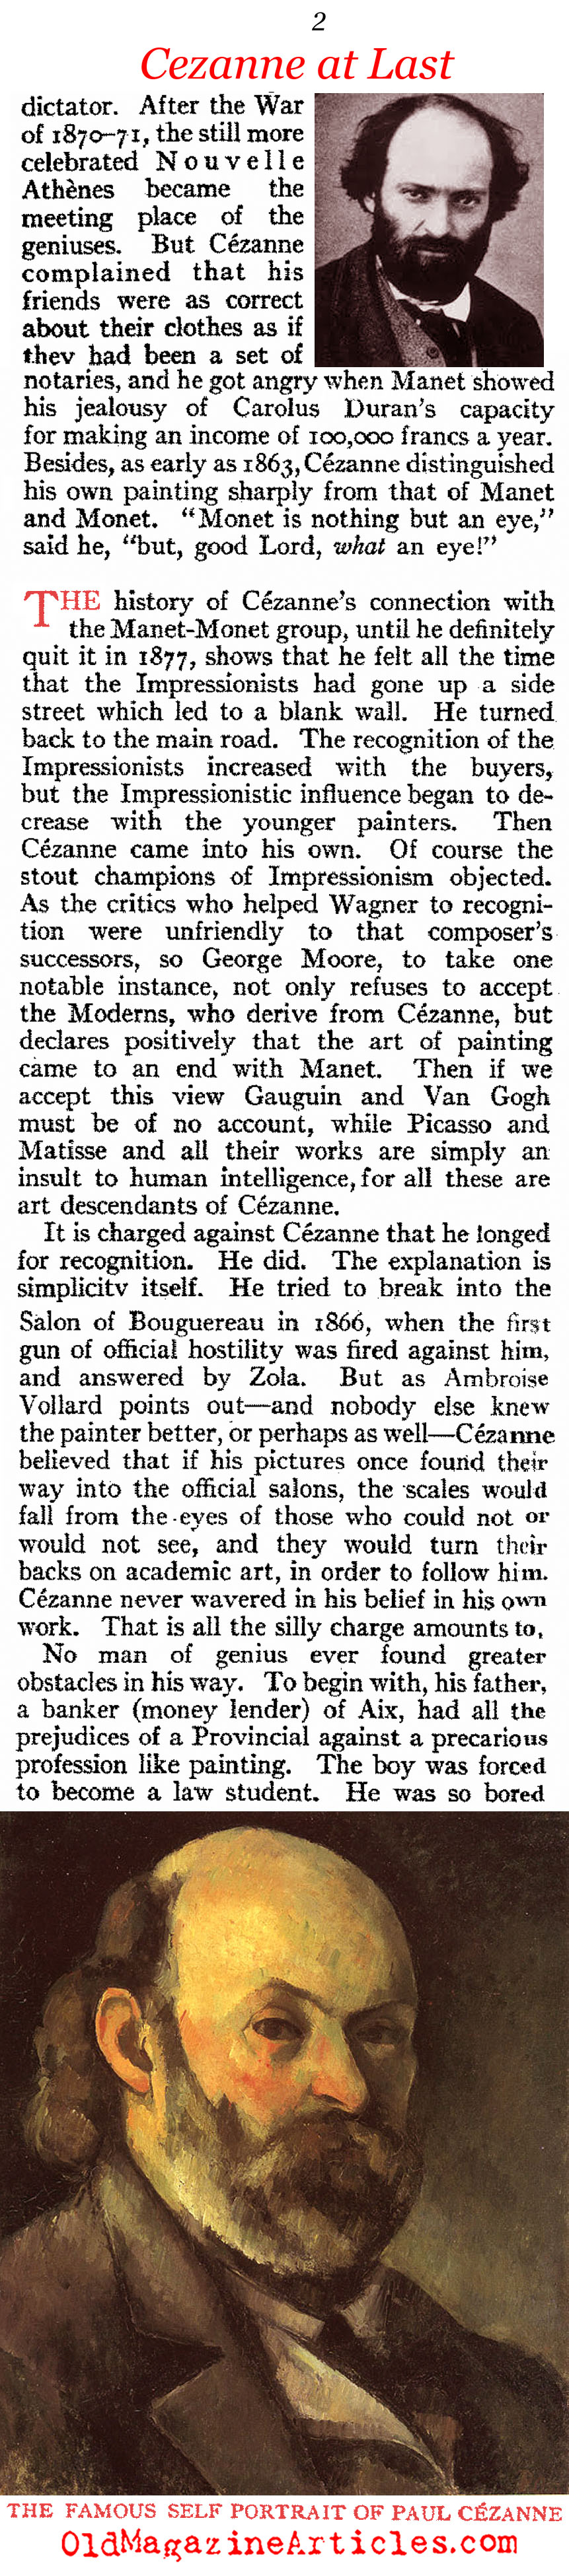 Paul Cezanne Gets His American Viewing  (Vanity Fair Magazine, 1915)